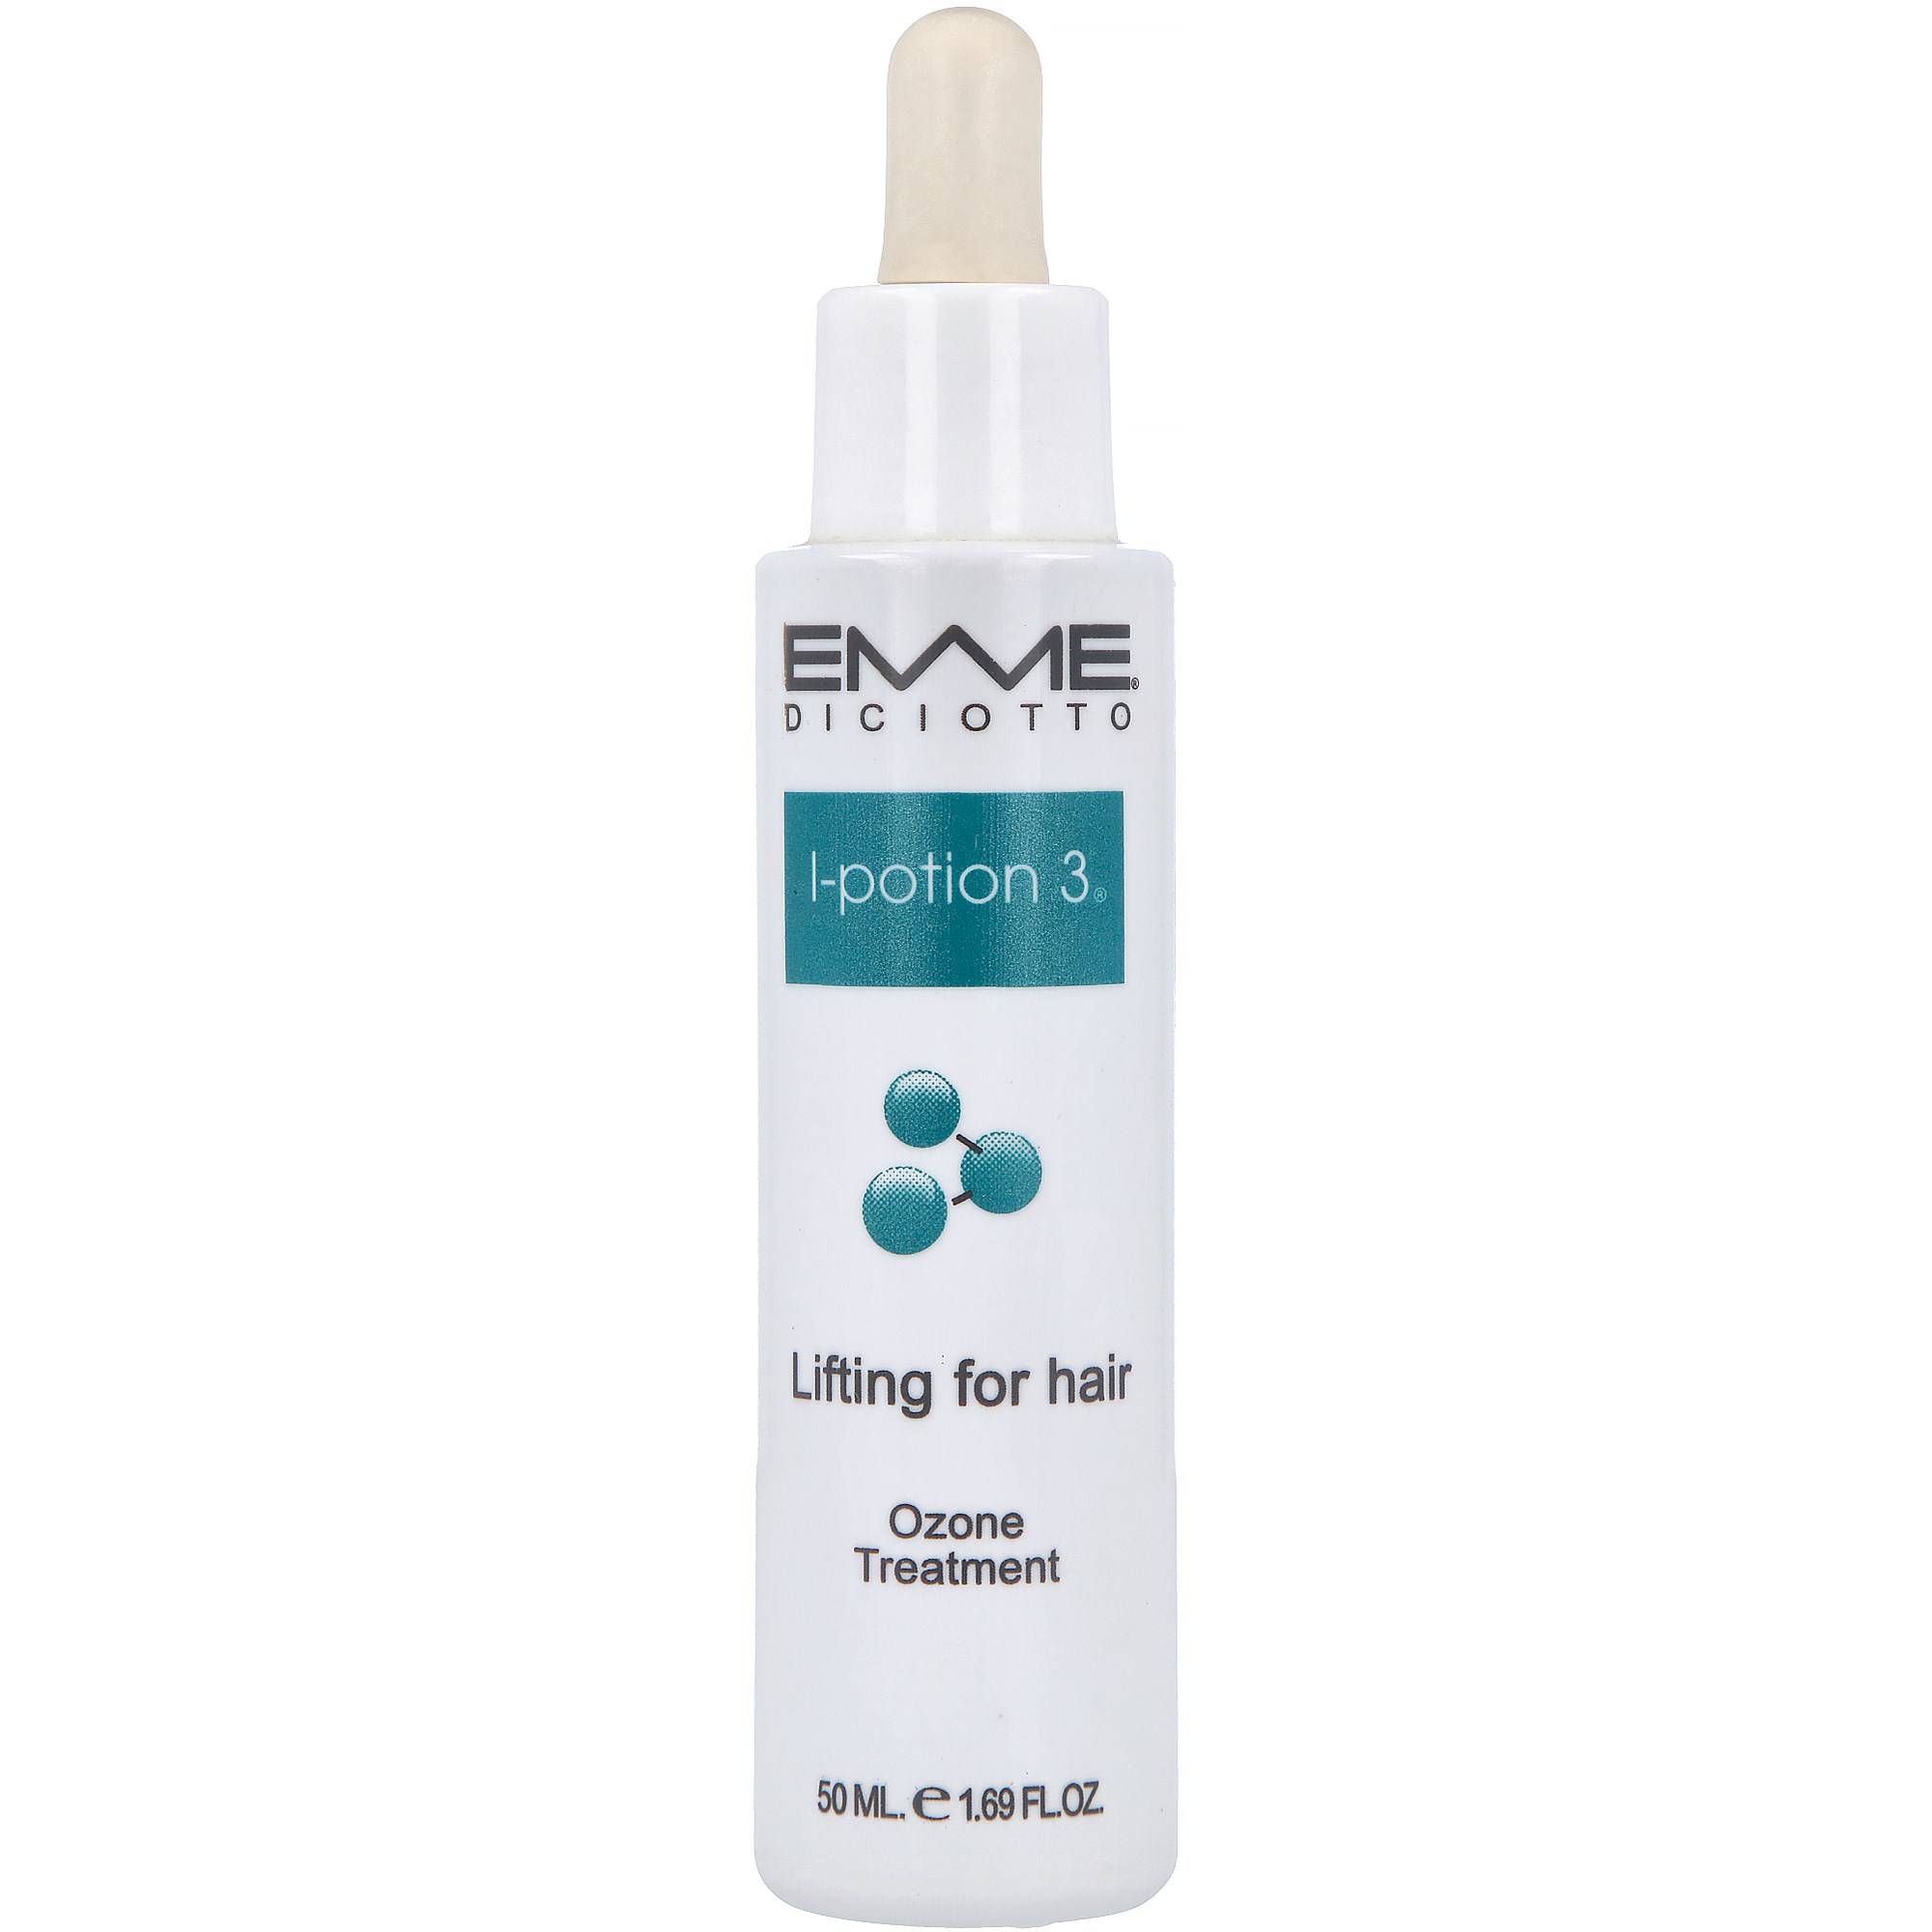 Emmediciotto I-Potion 3 Lifting For Hair Ozone Treatment 50 ml